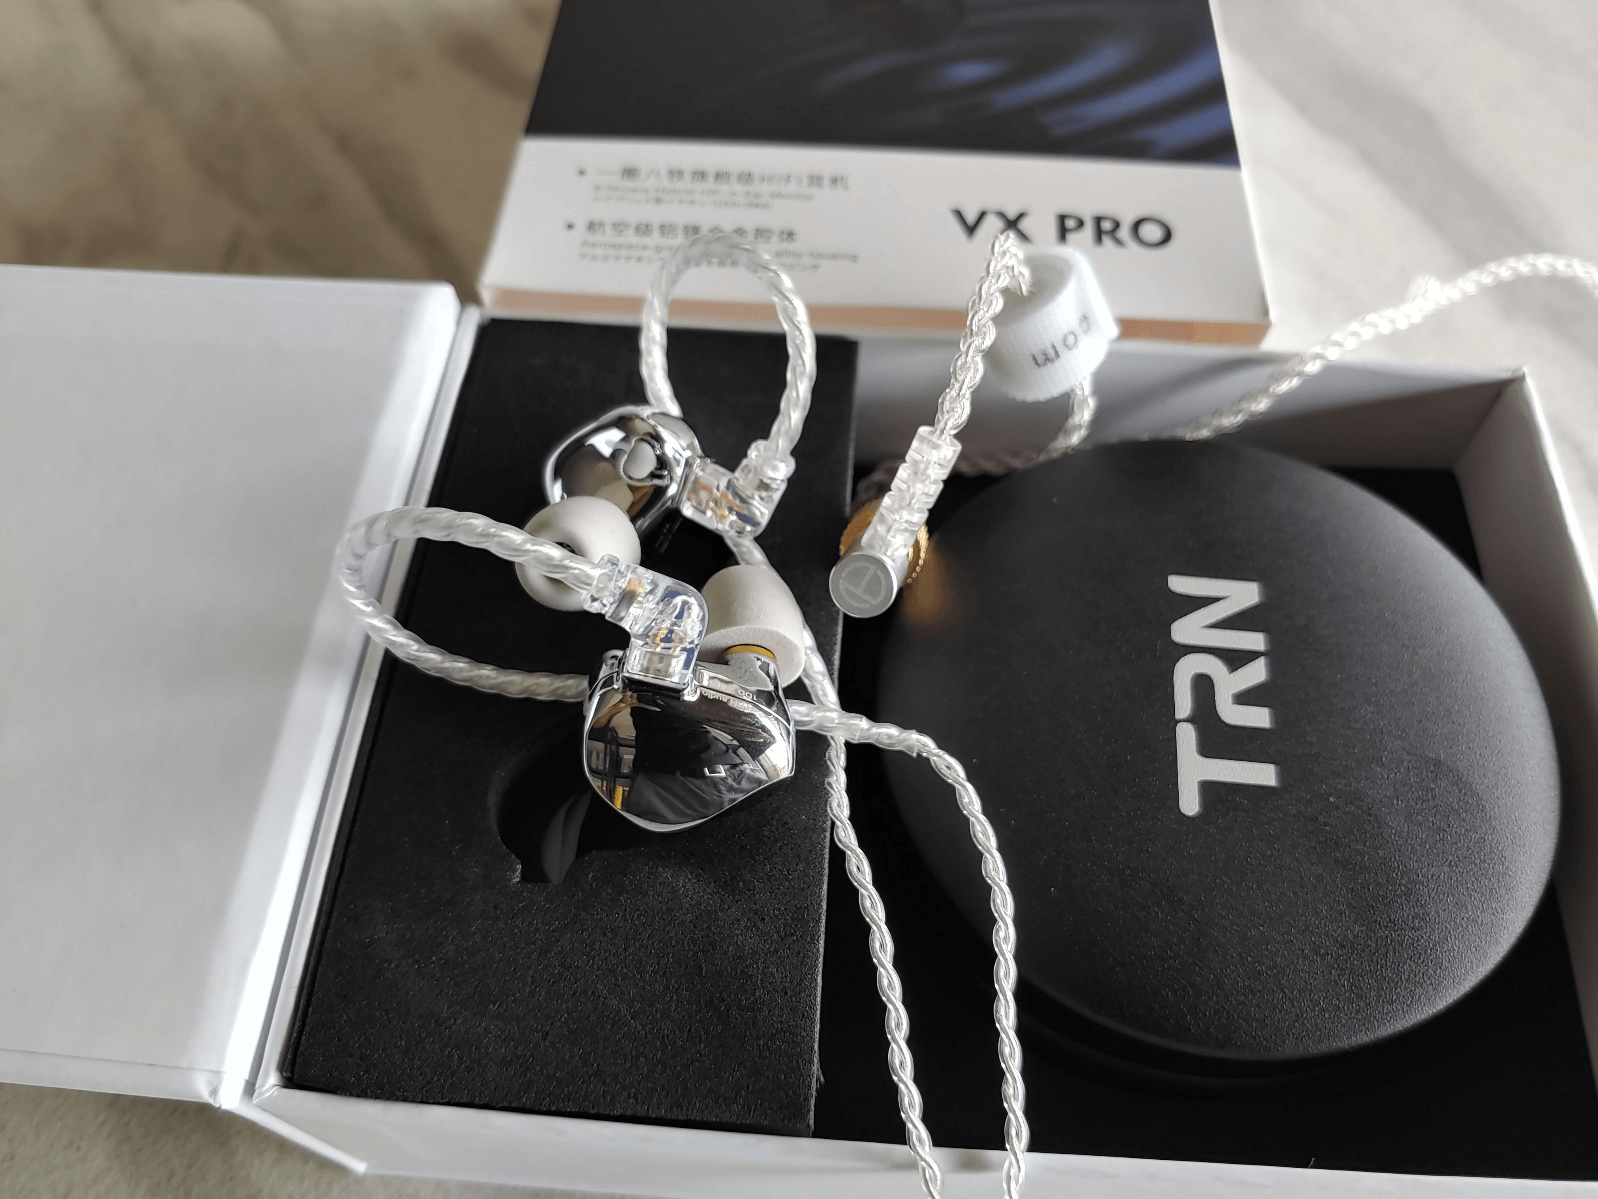 TRN VX-Pro – V Sound Done Right